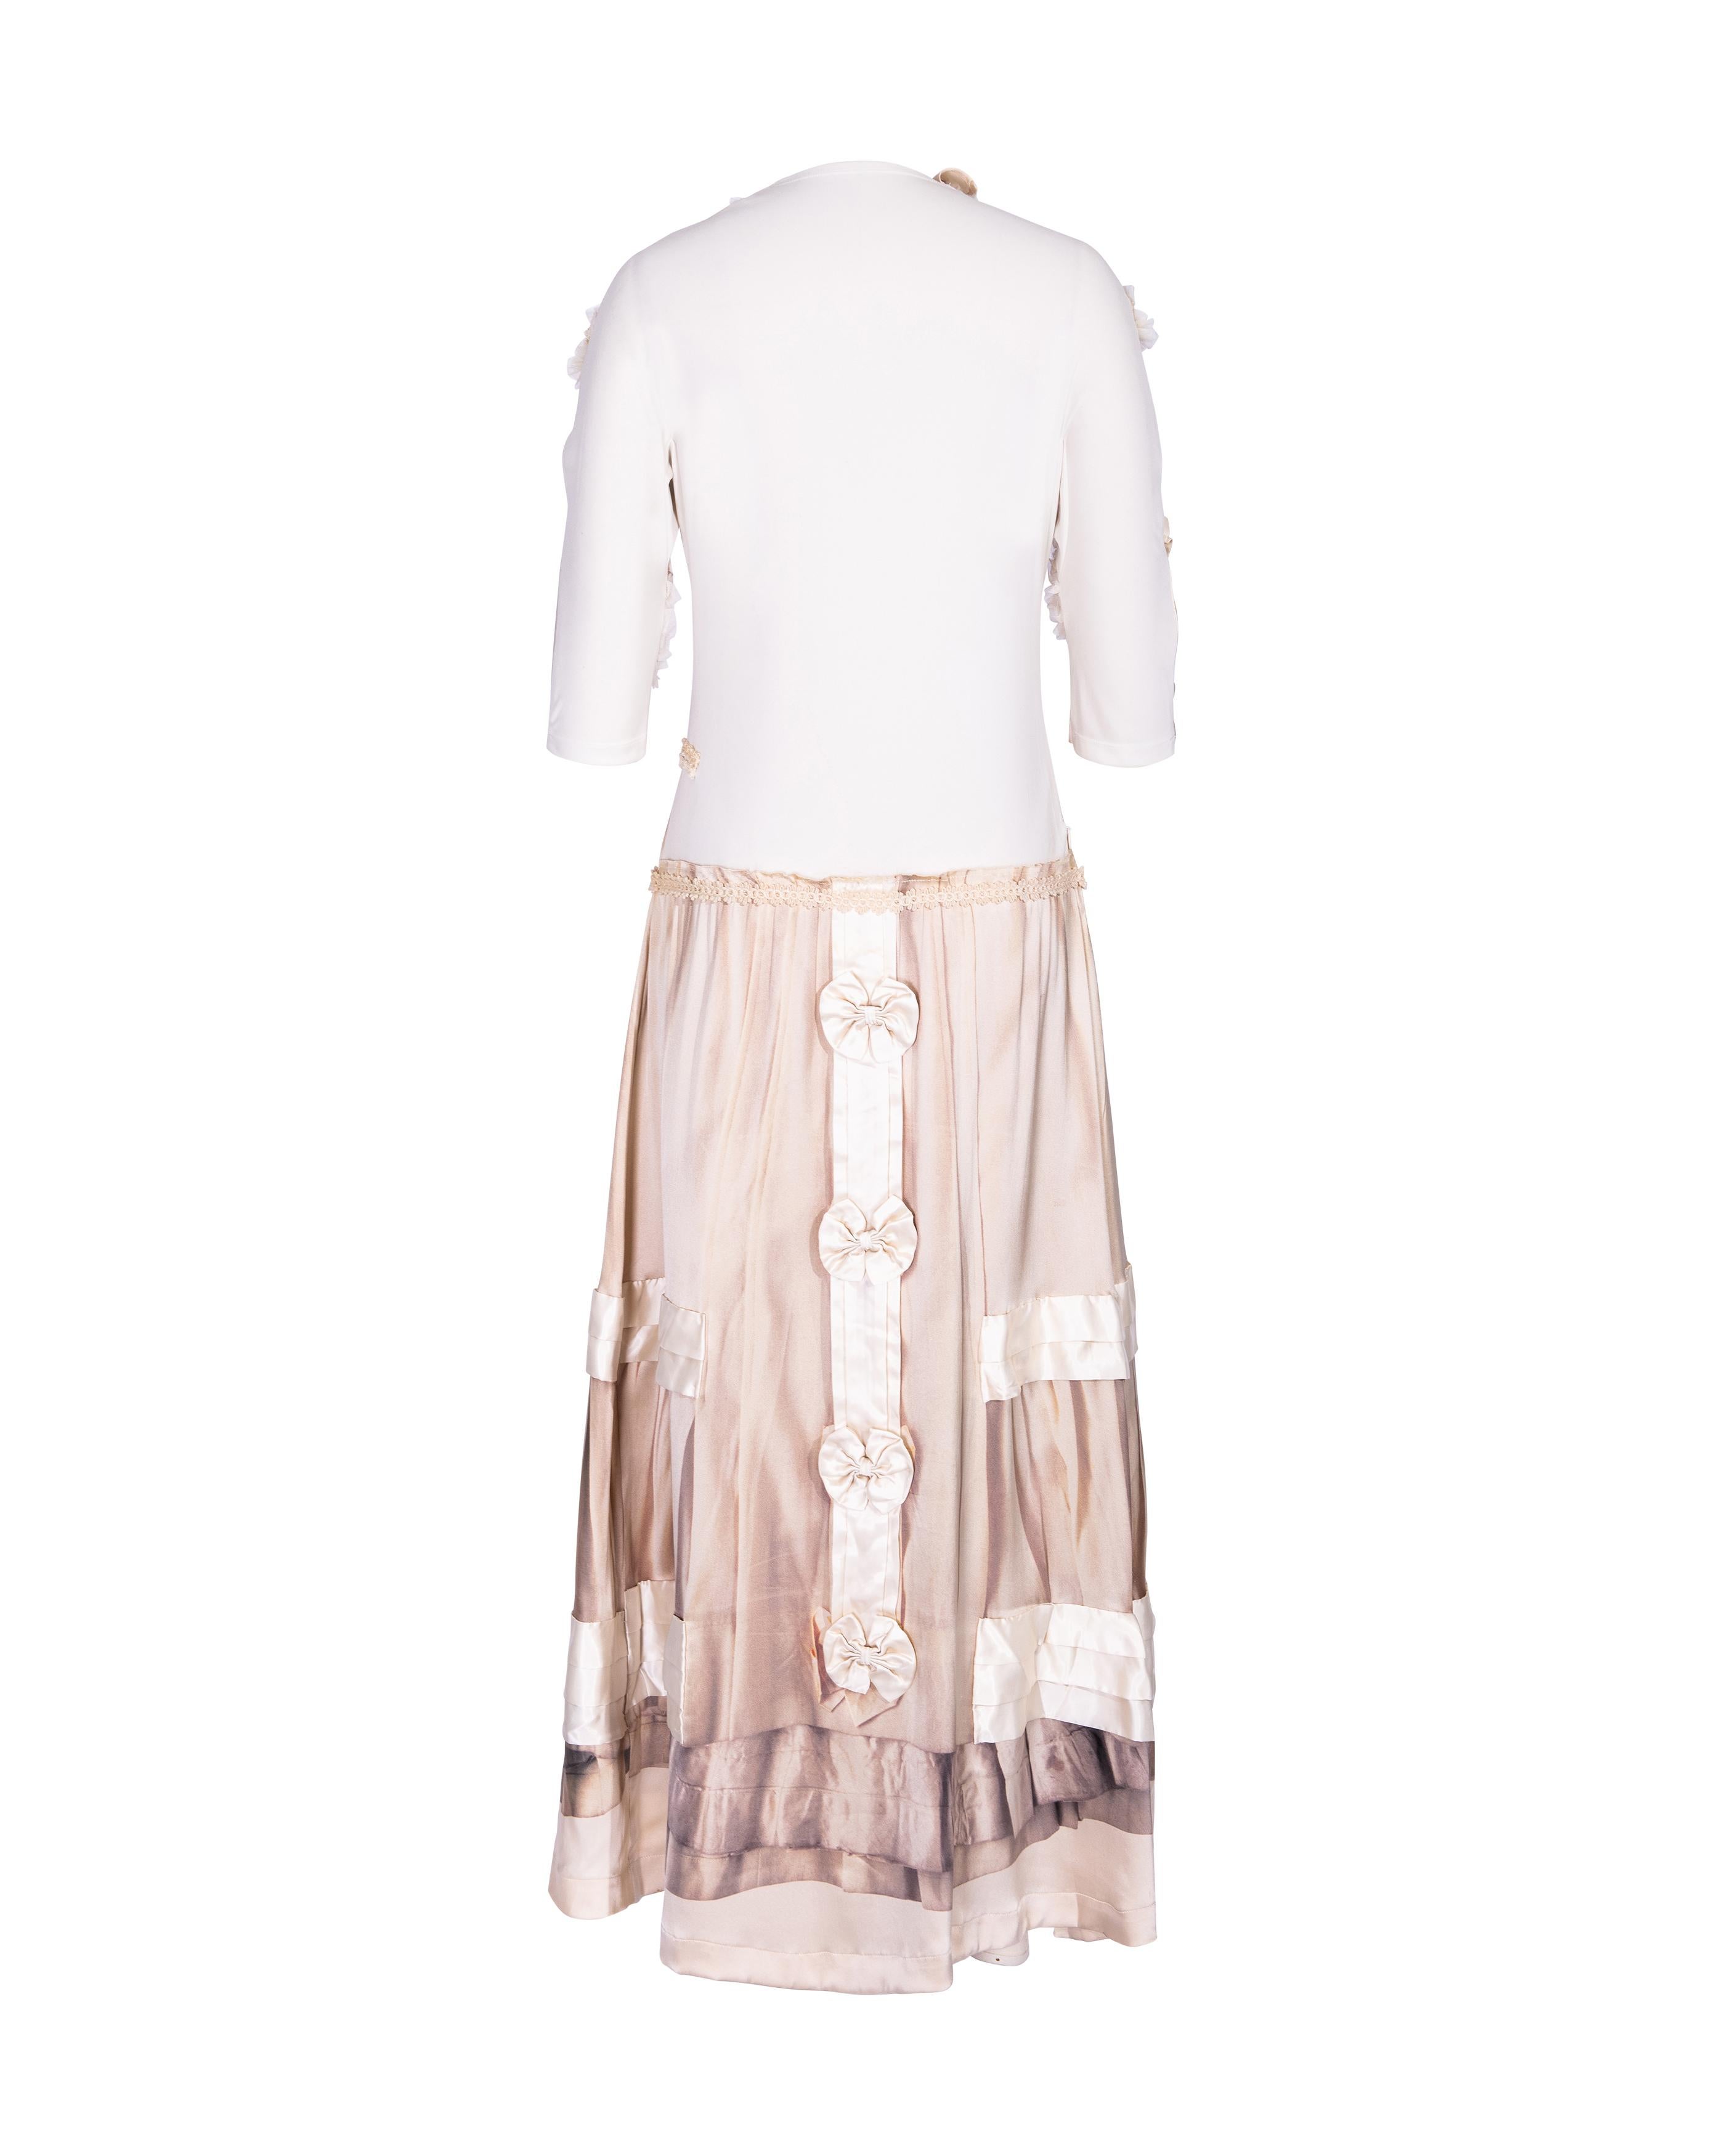 Women's A/W 2005 Comme des Garcons  'Broken Bride' Collection Deconstructed Tan Gown